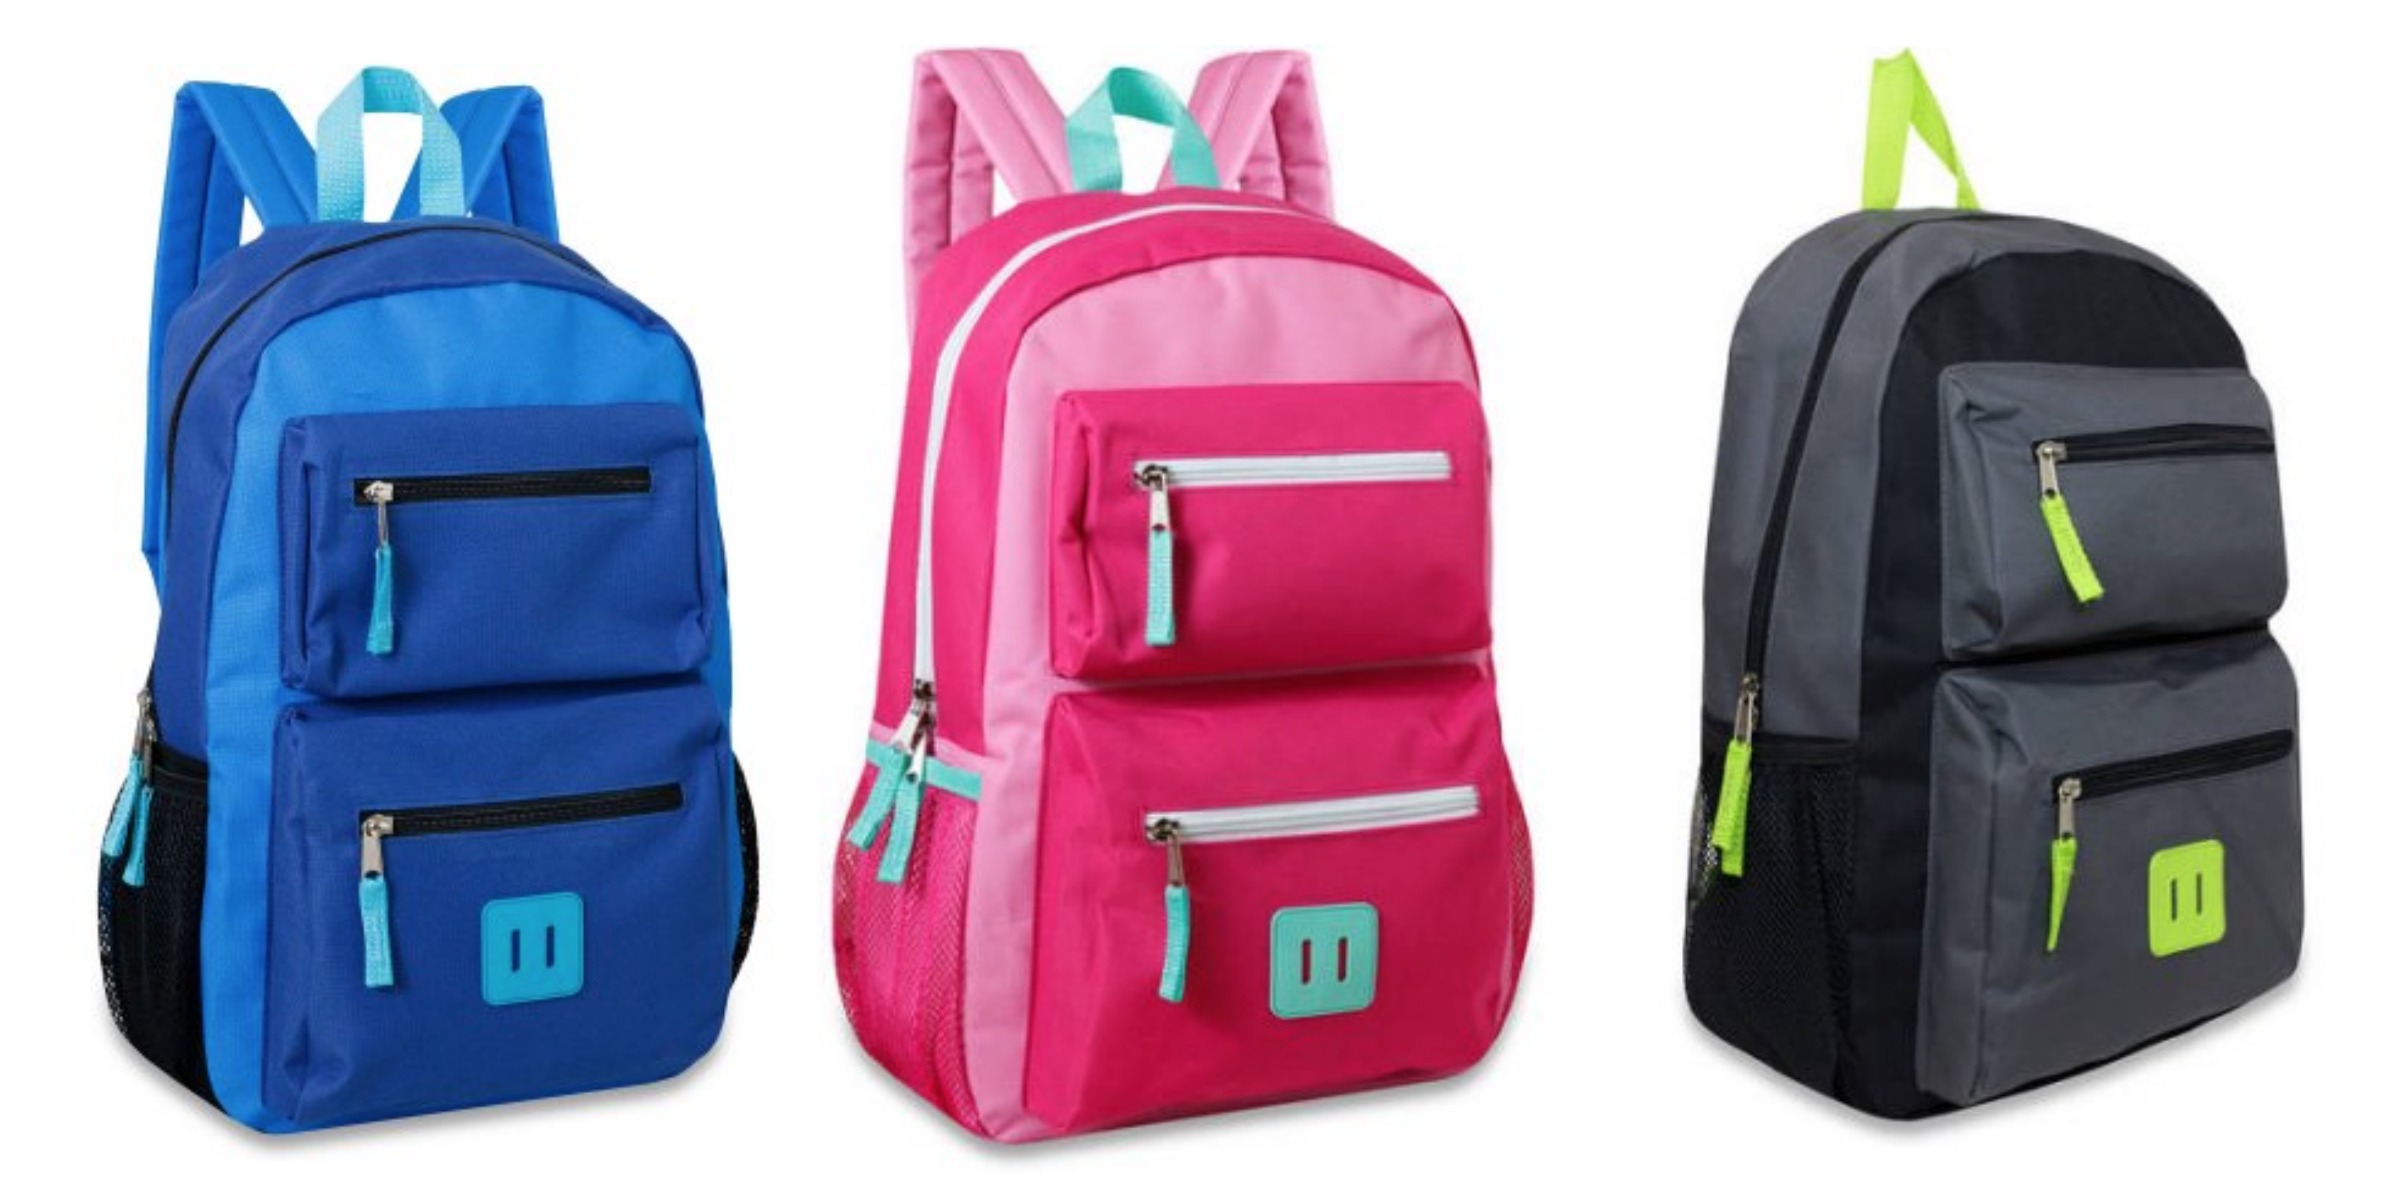 freebies2deals-backpacks